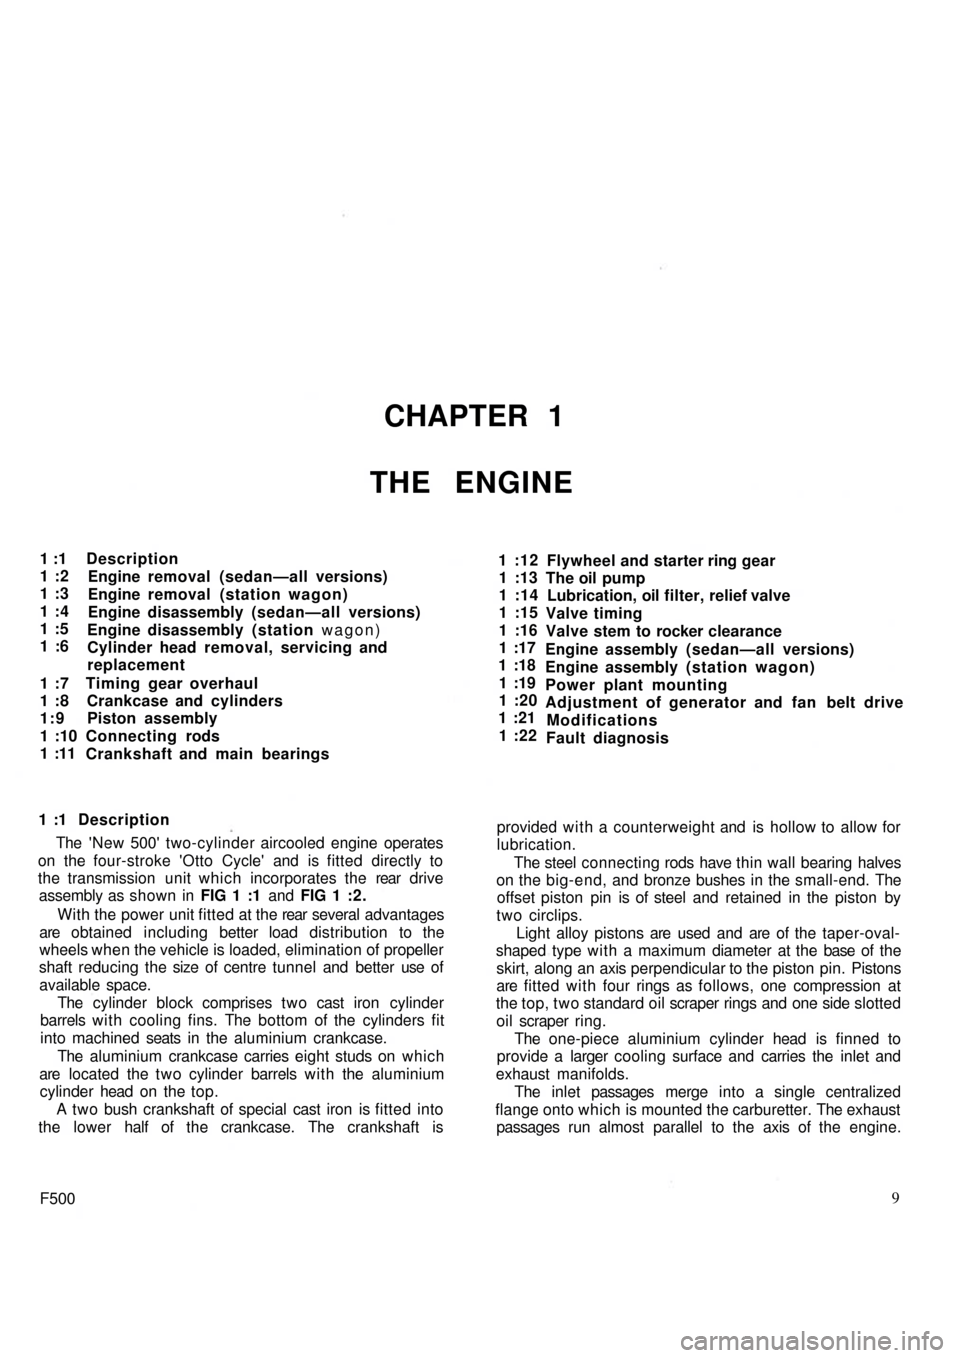 FIAT 500 1957 1.G Workshop Manual CHAPTER 1
THE ENGINE
1 :1
1 :2
1 :3
1 :4
1 :5
1 :6
1 :7
1 :8
1:9
1 :10
1 :11Description
Engine removal (sedan—all versions)
Engine removal (station wagon)
Engine disassembly (sedan—all versions)
E